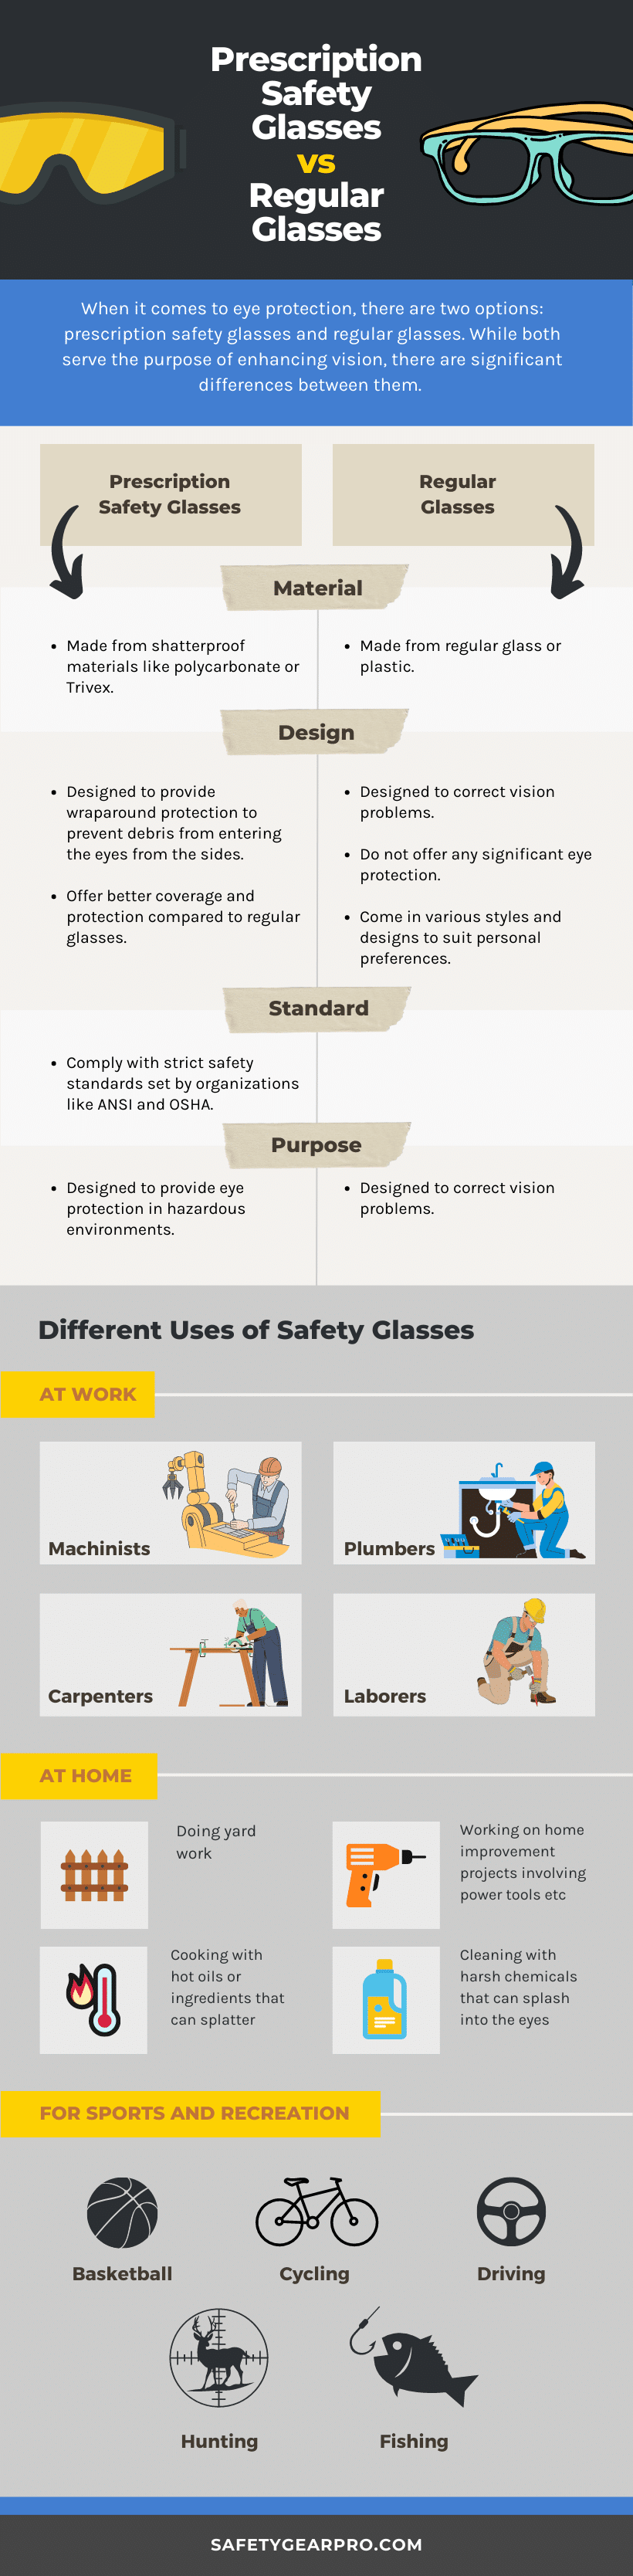 Prescription Safety Glasses versus Regular Glasses infographic